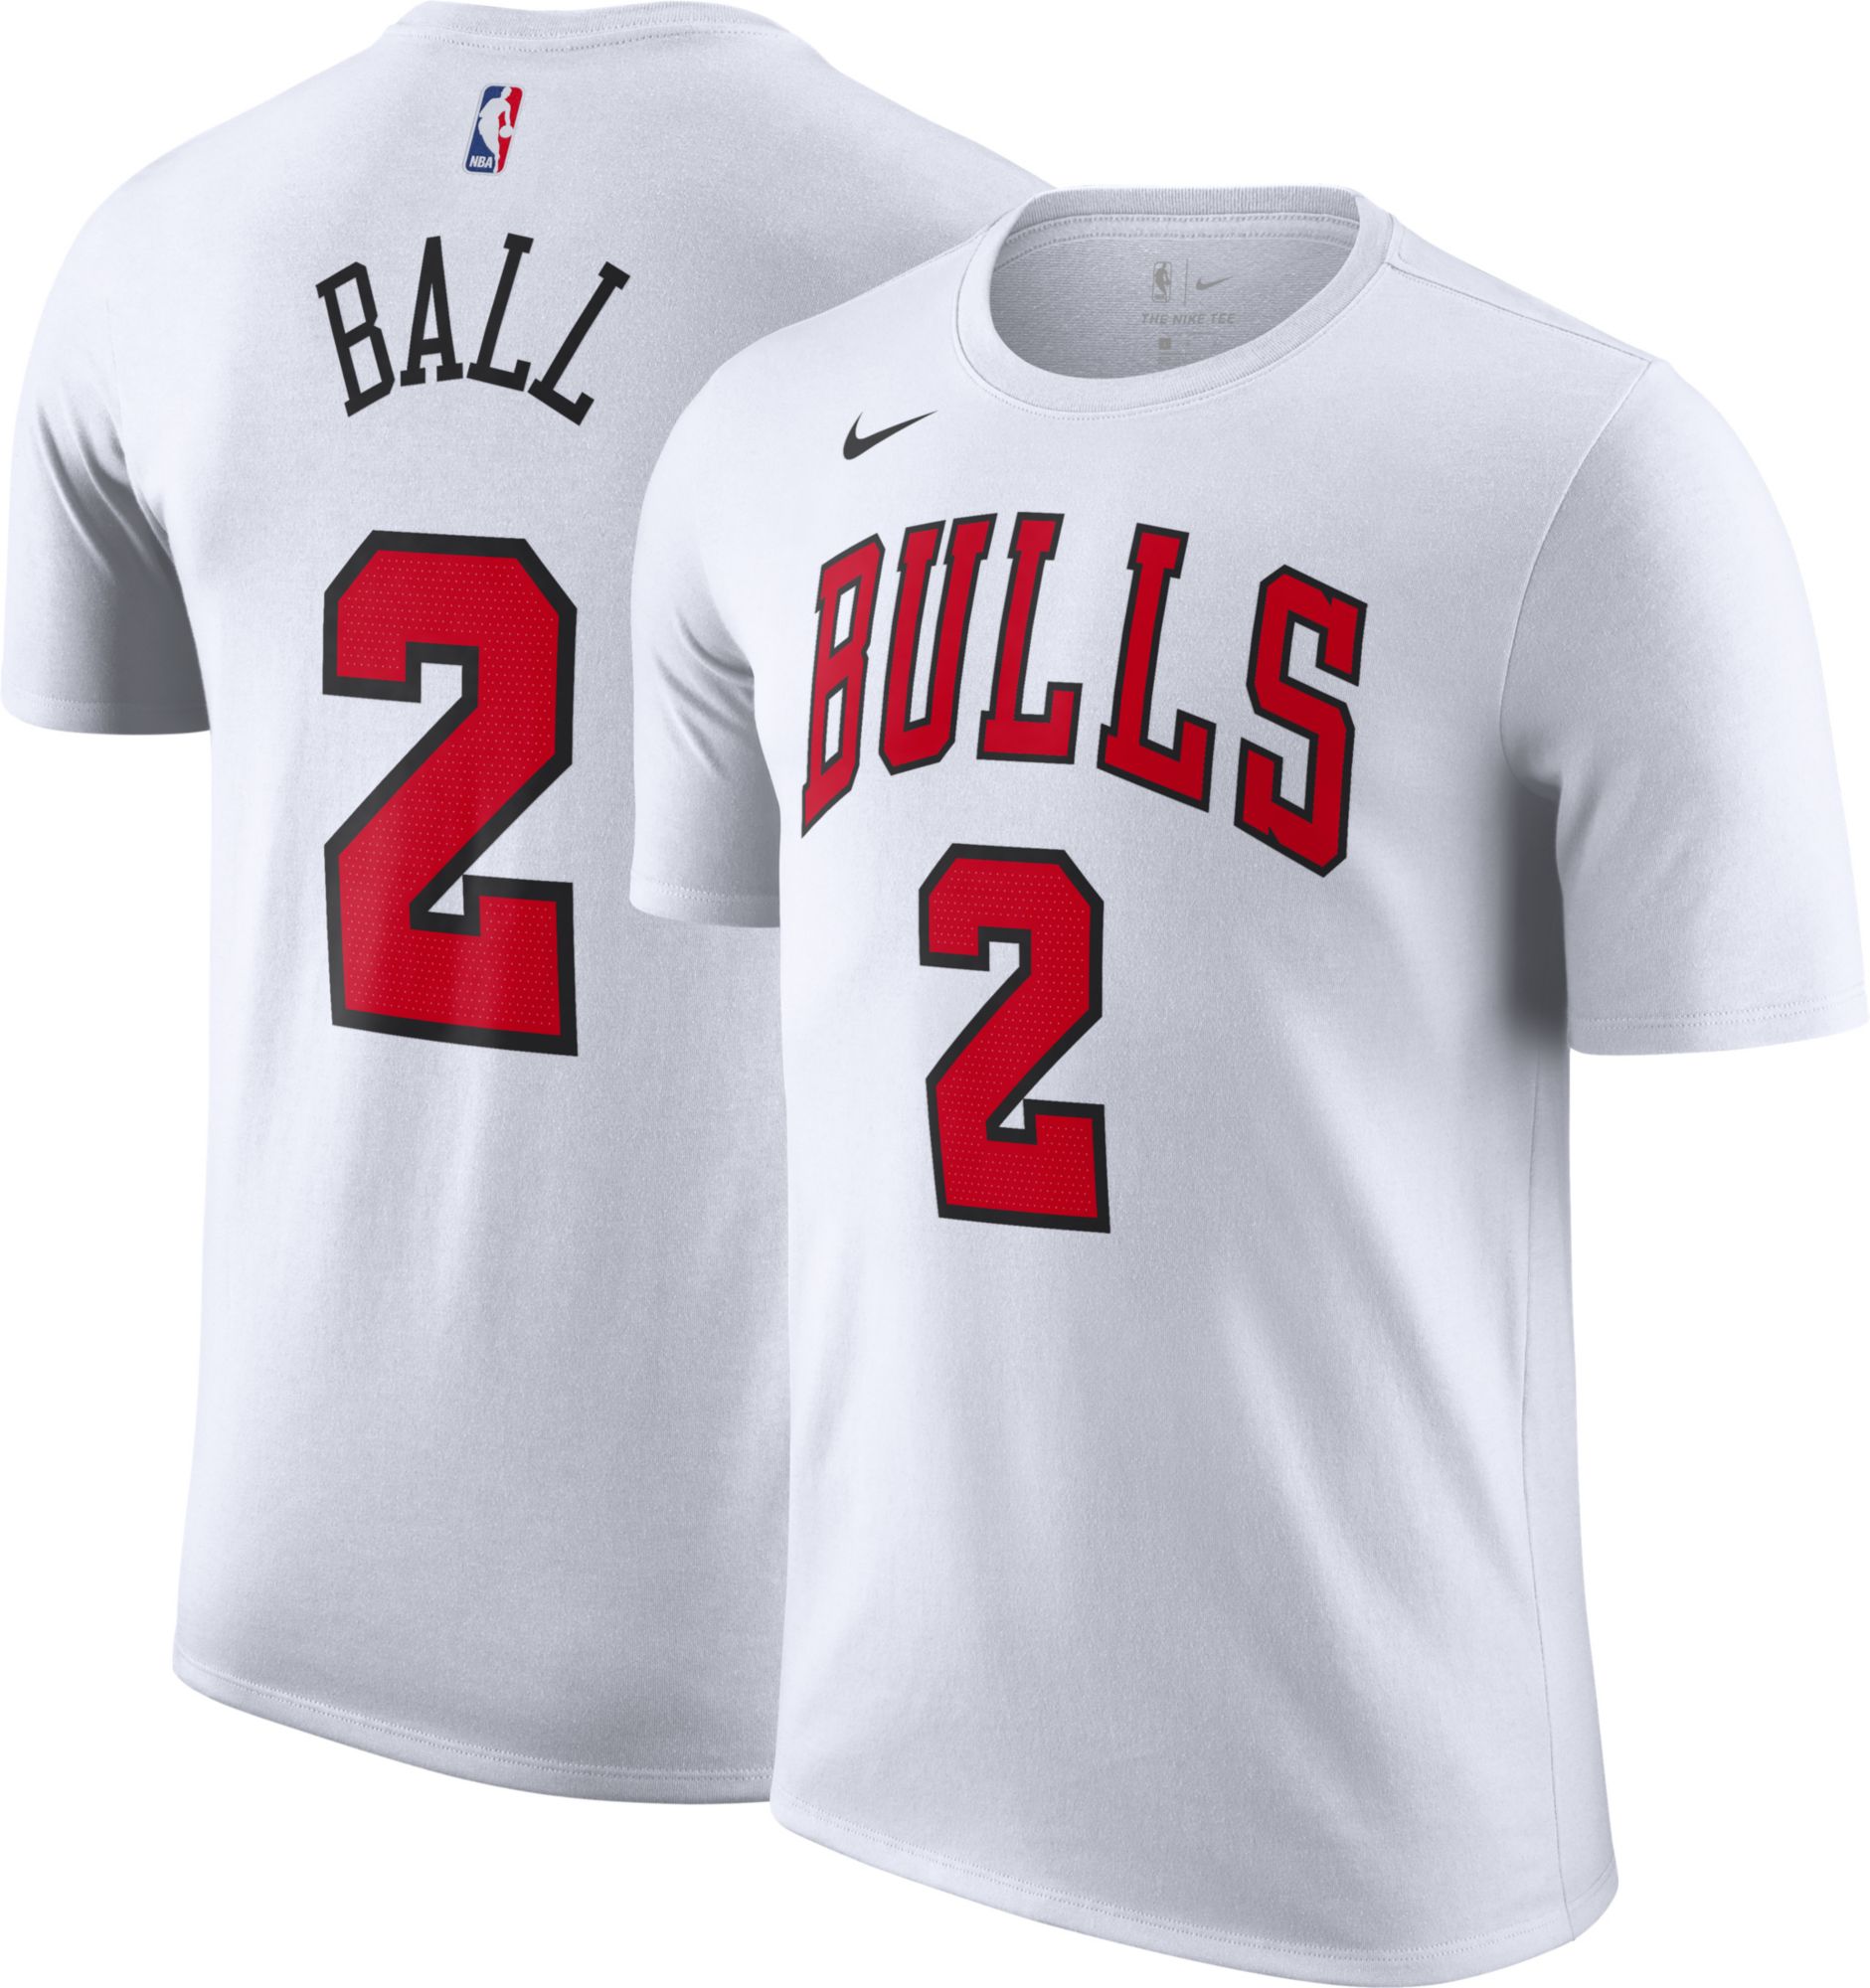 Nike Men's Chicago Bulls Lonzo Ball #2 Black Dri-FIT Swingman Jersey